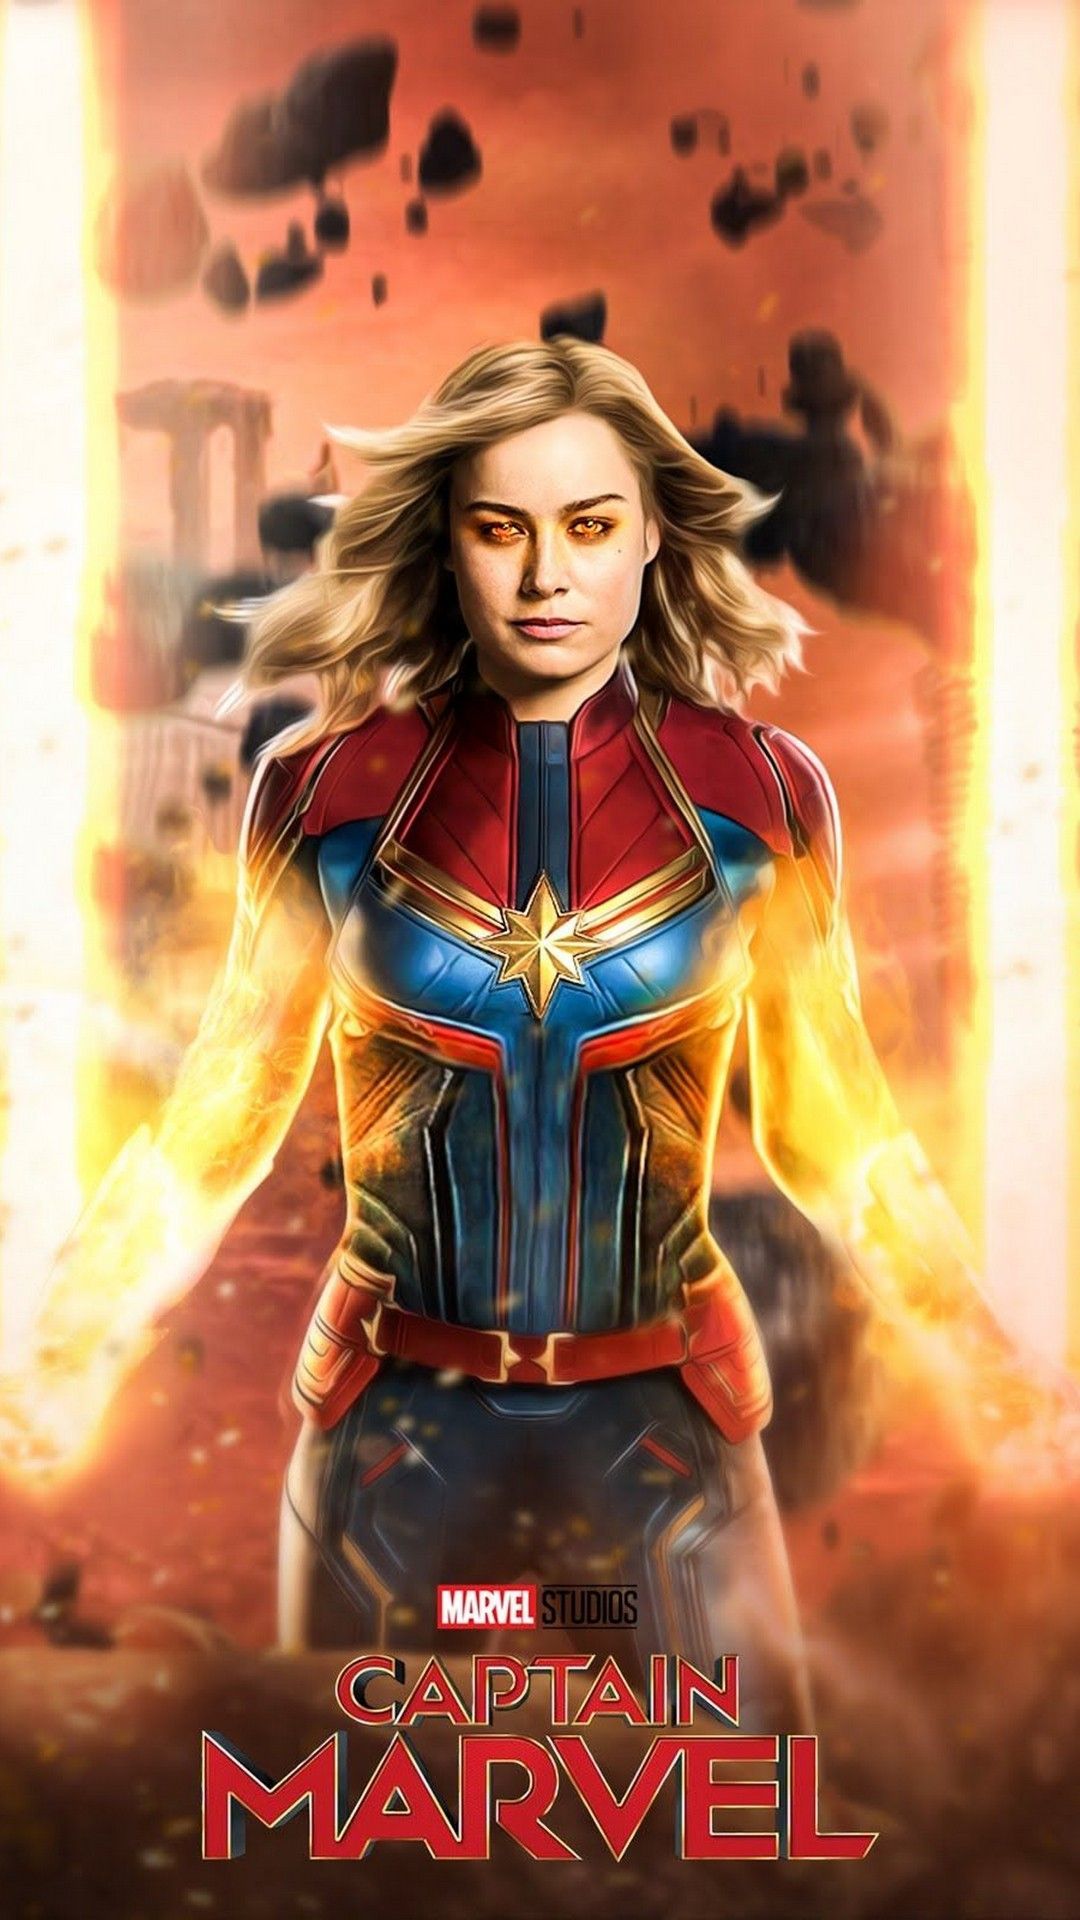 Great 8 Avengers End Game Background For Your Android or iPhone Wallpaper #android #iphone #wallpaper. Marvel heroines, Captain marvel, Marvel